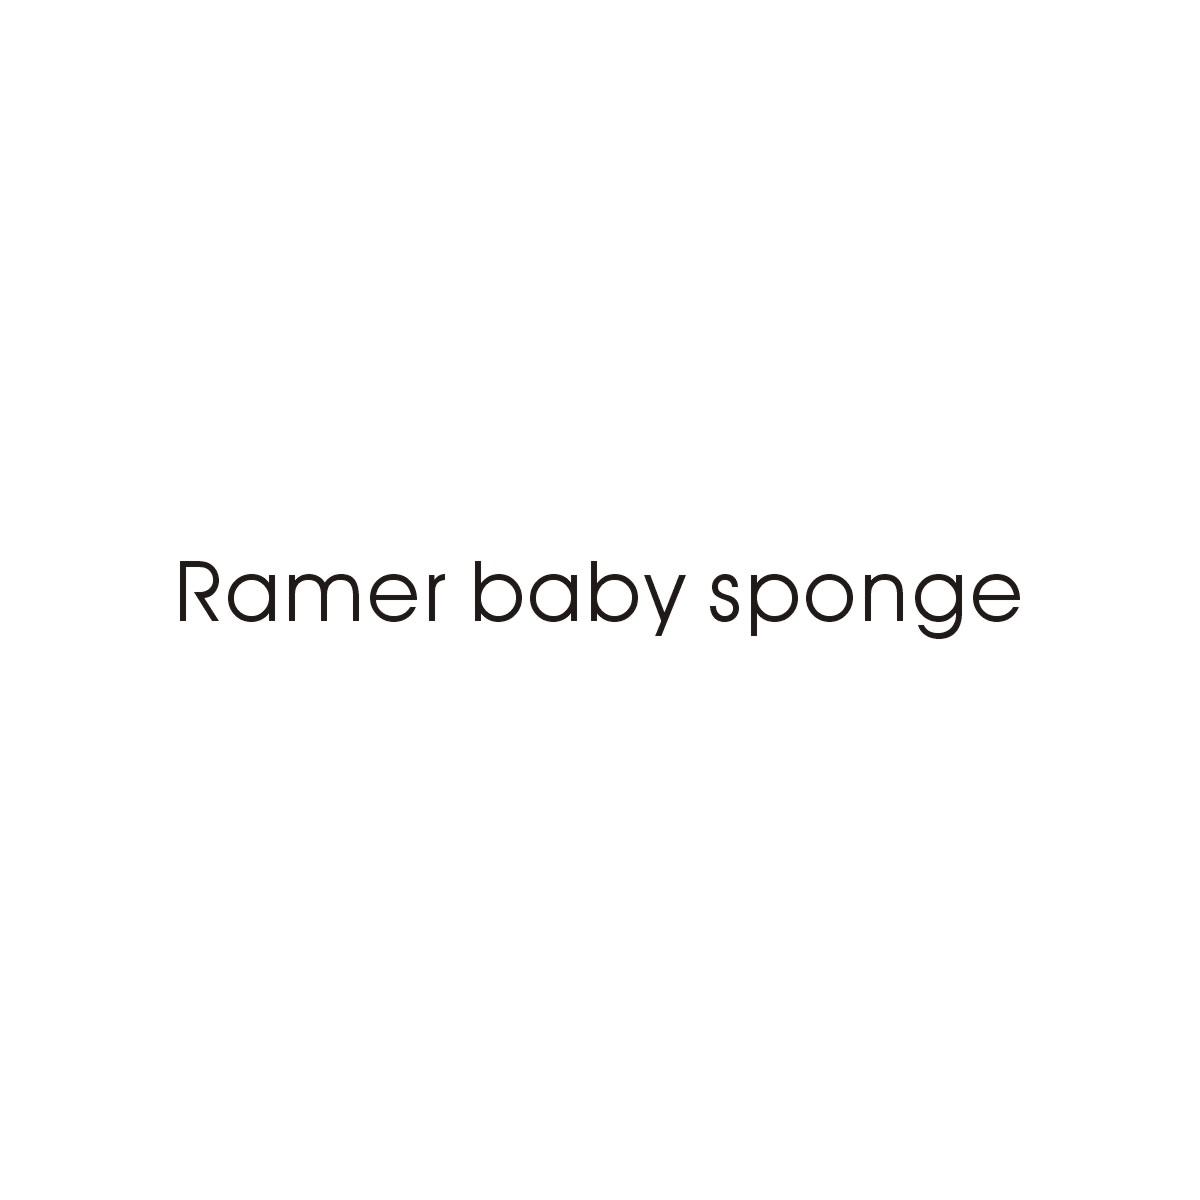 21类-厨具瓷器RAMER BABY SPONGE商标转让